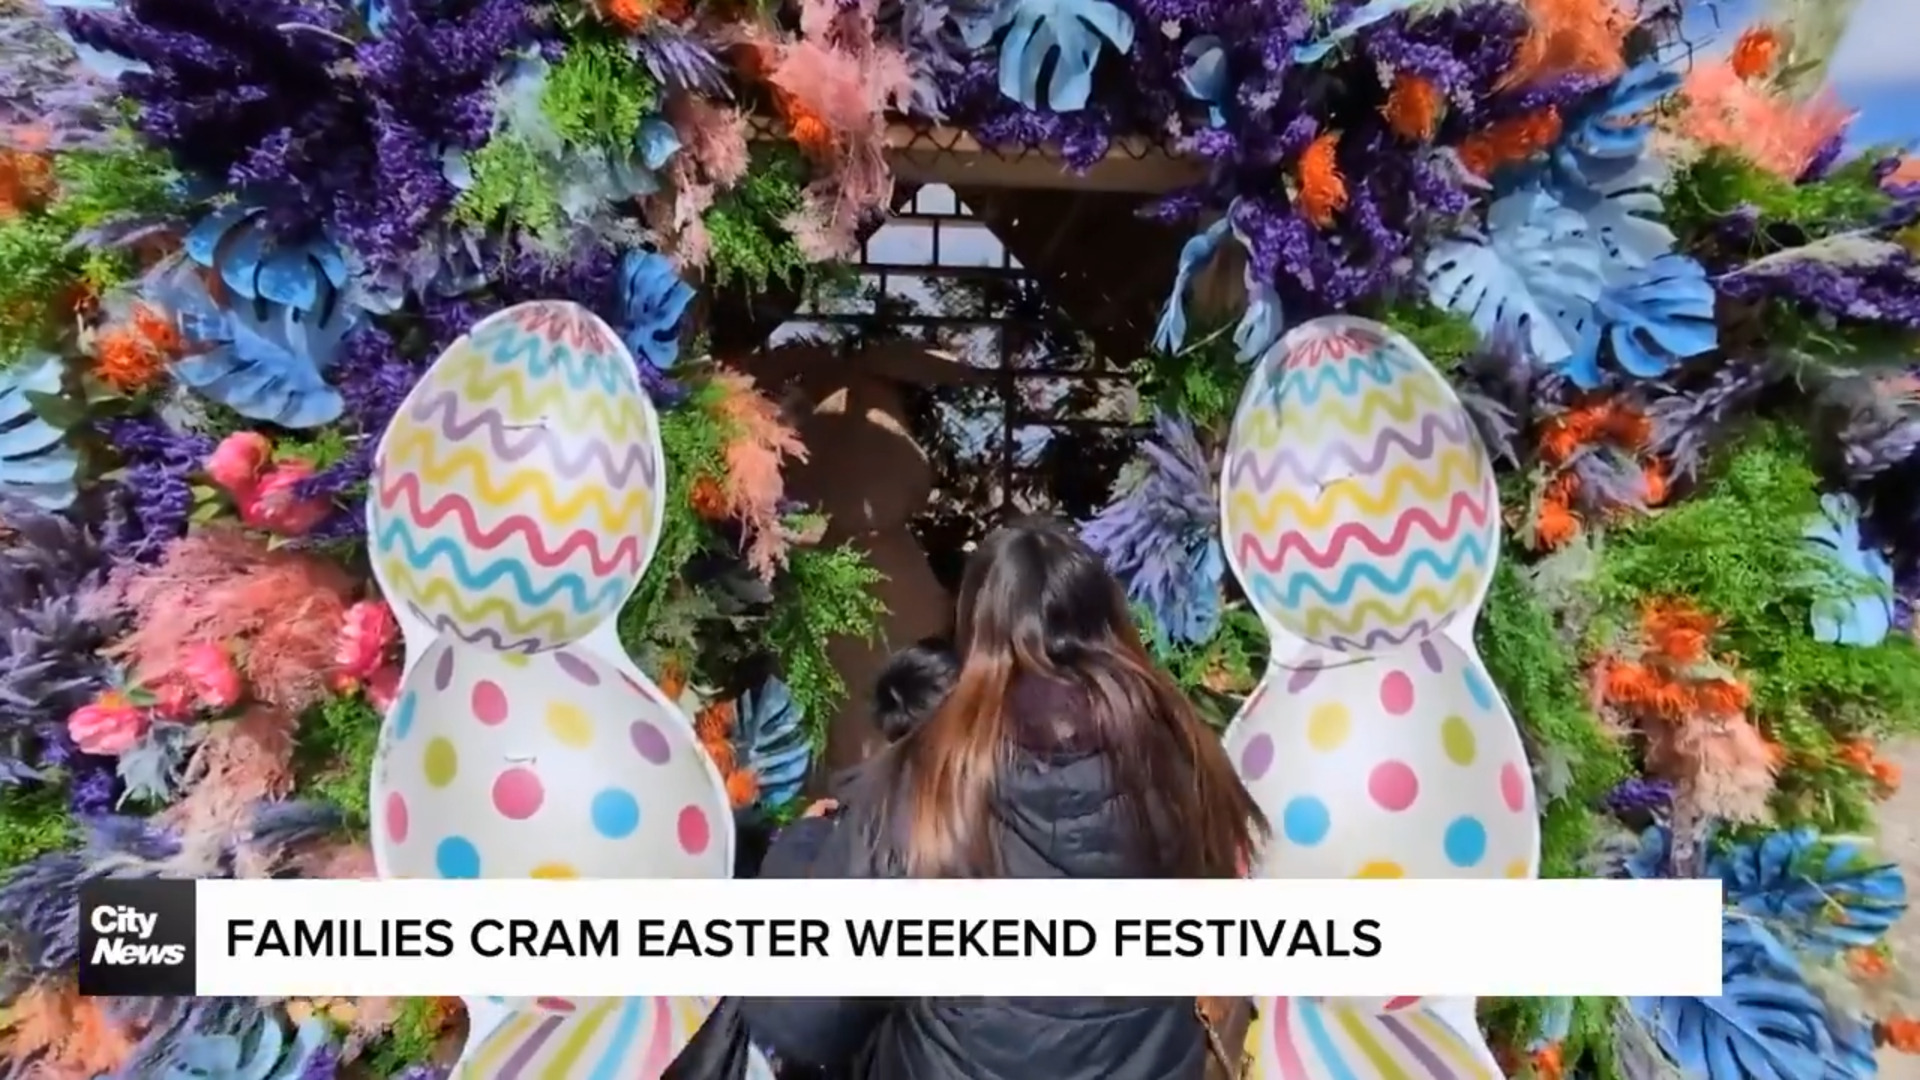 Families celebrate Easter weekend activities